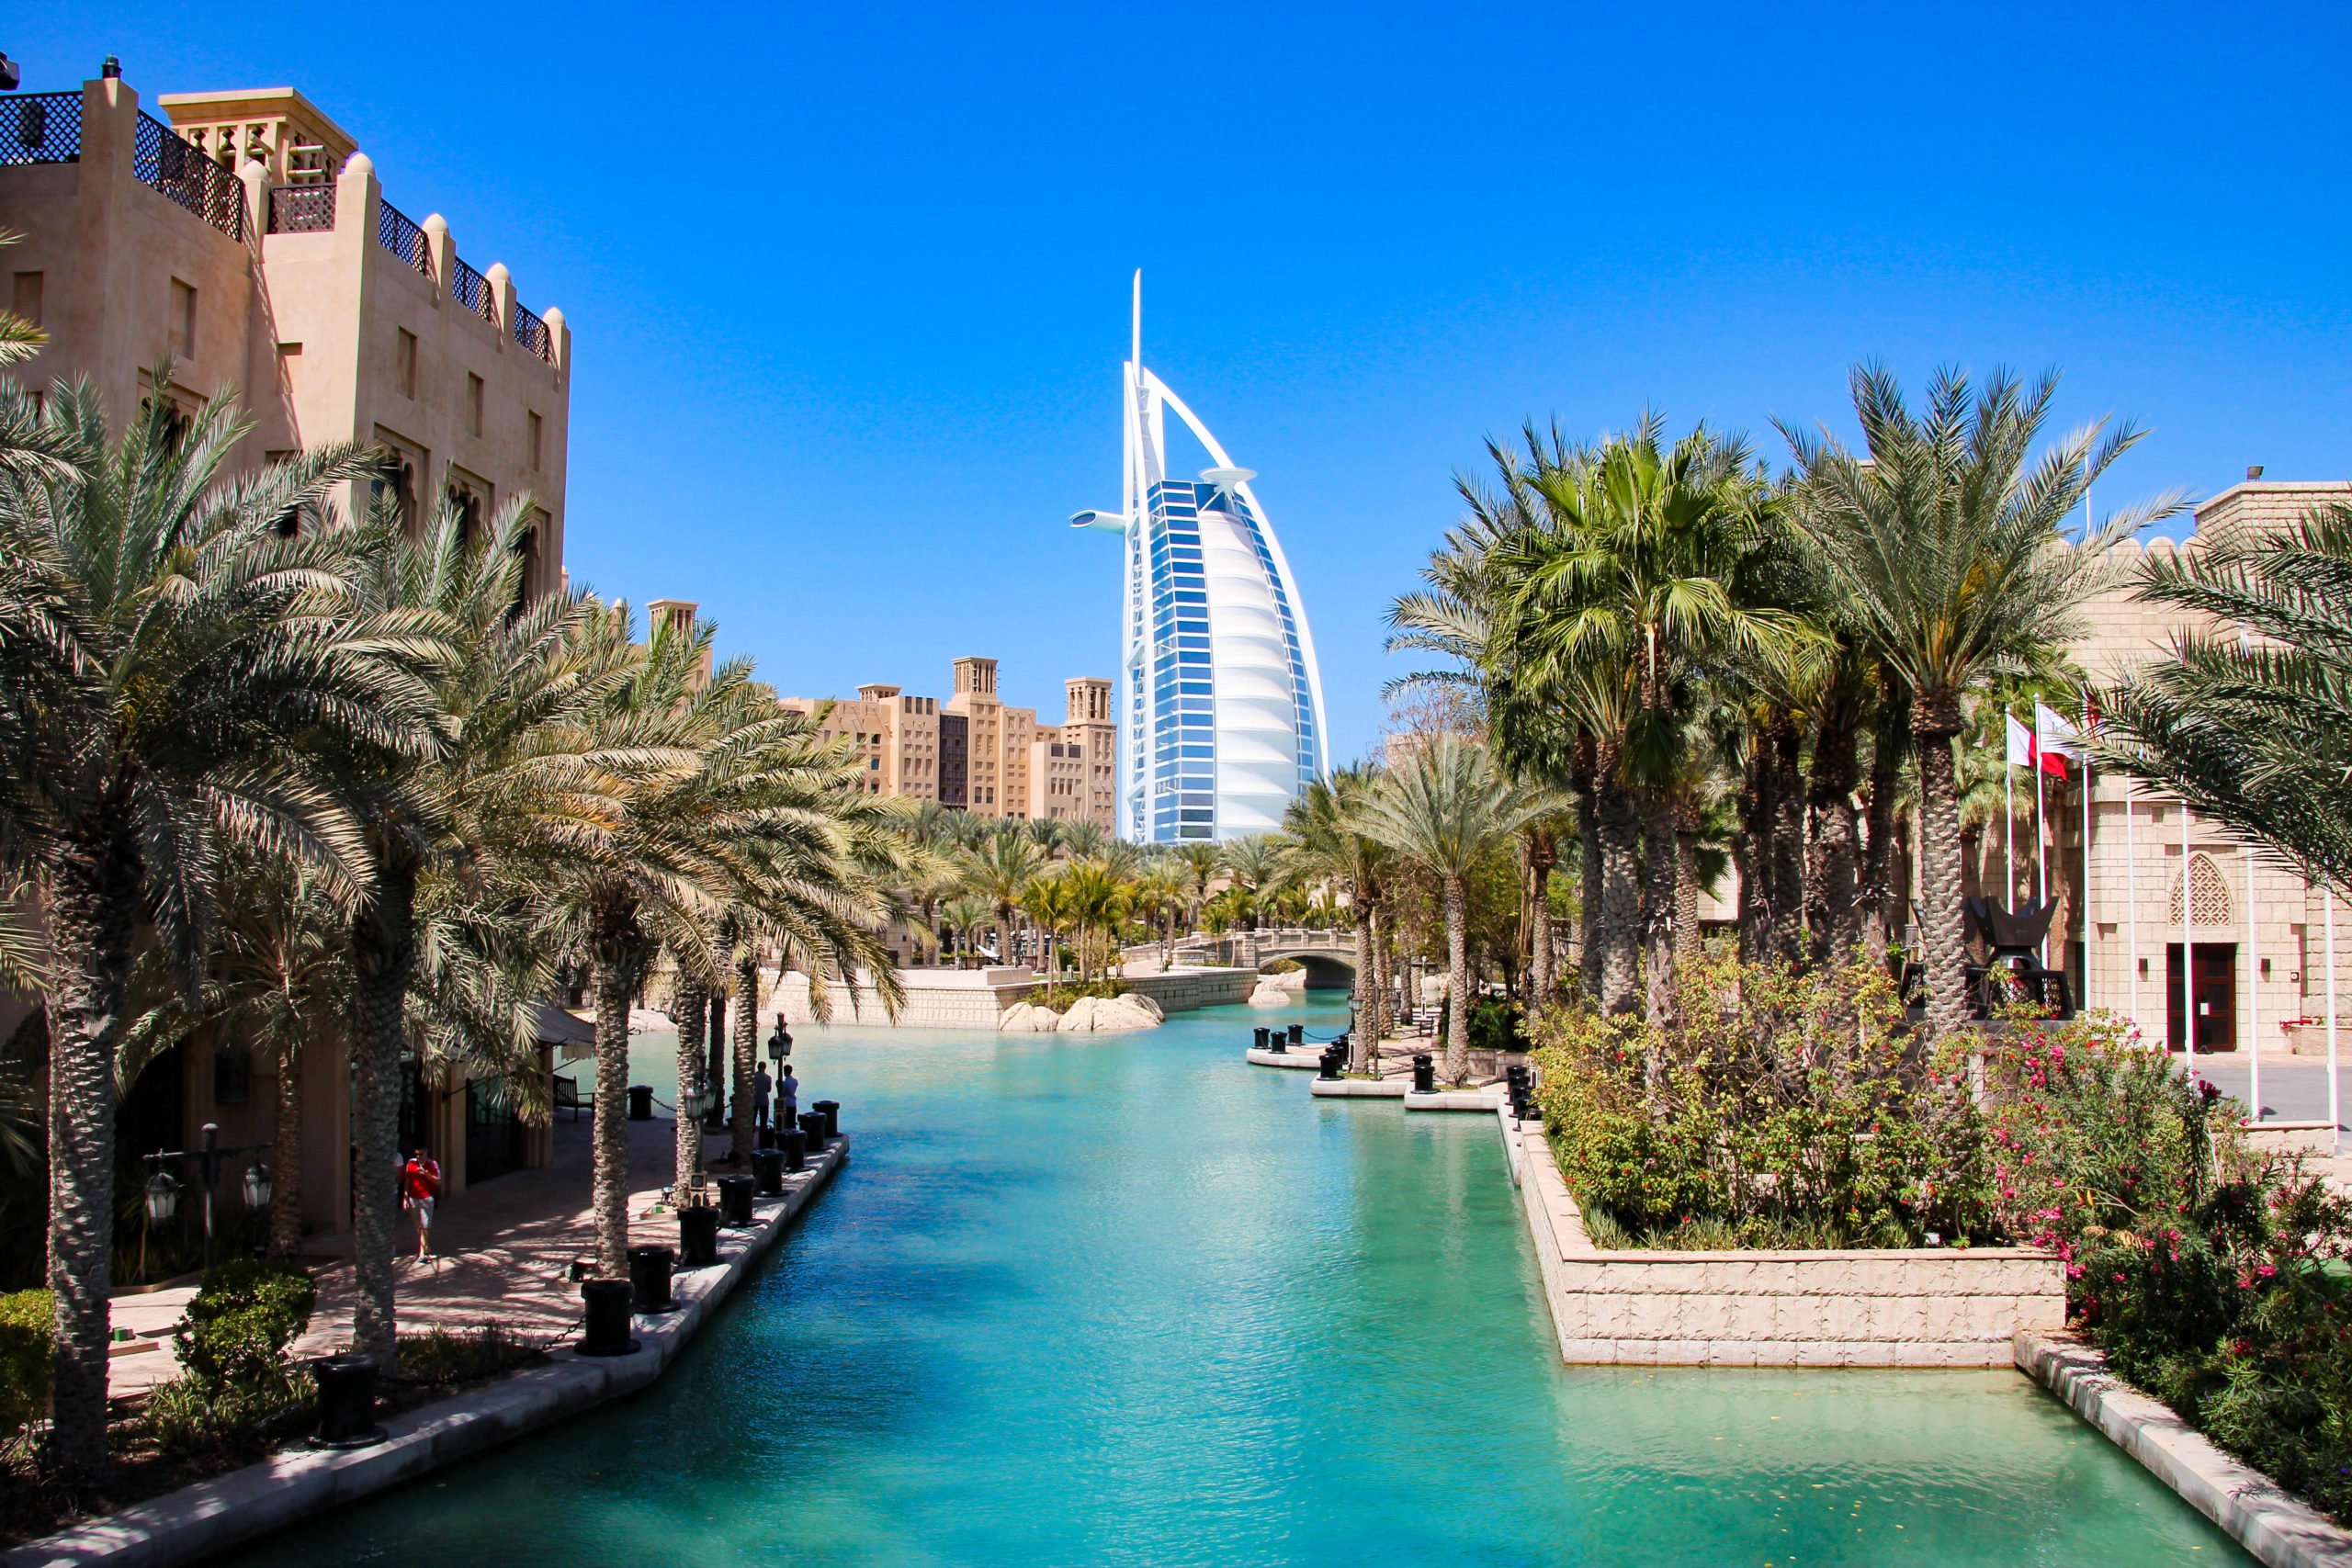 Explore The City Of Dubai On The 11 Day Israel, Dubai And Abu Dhabi Package Tour